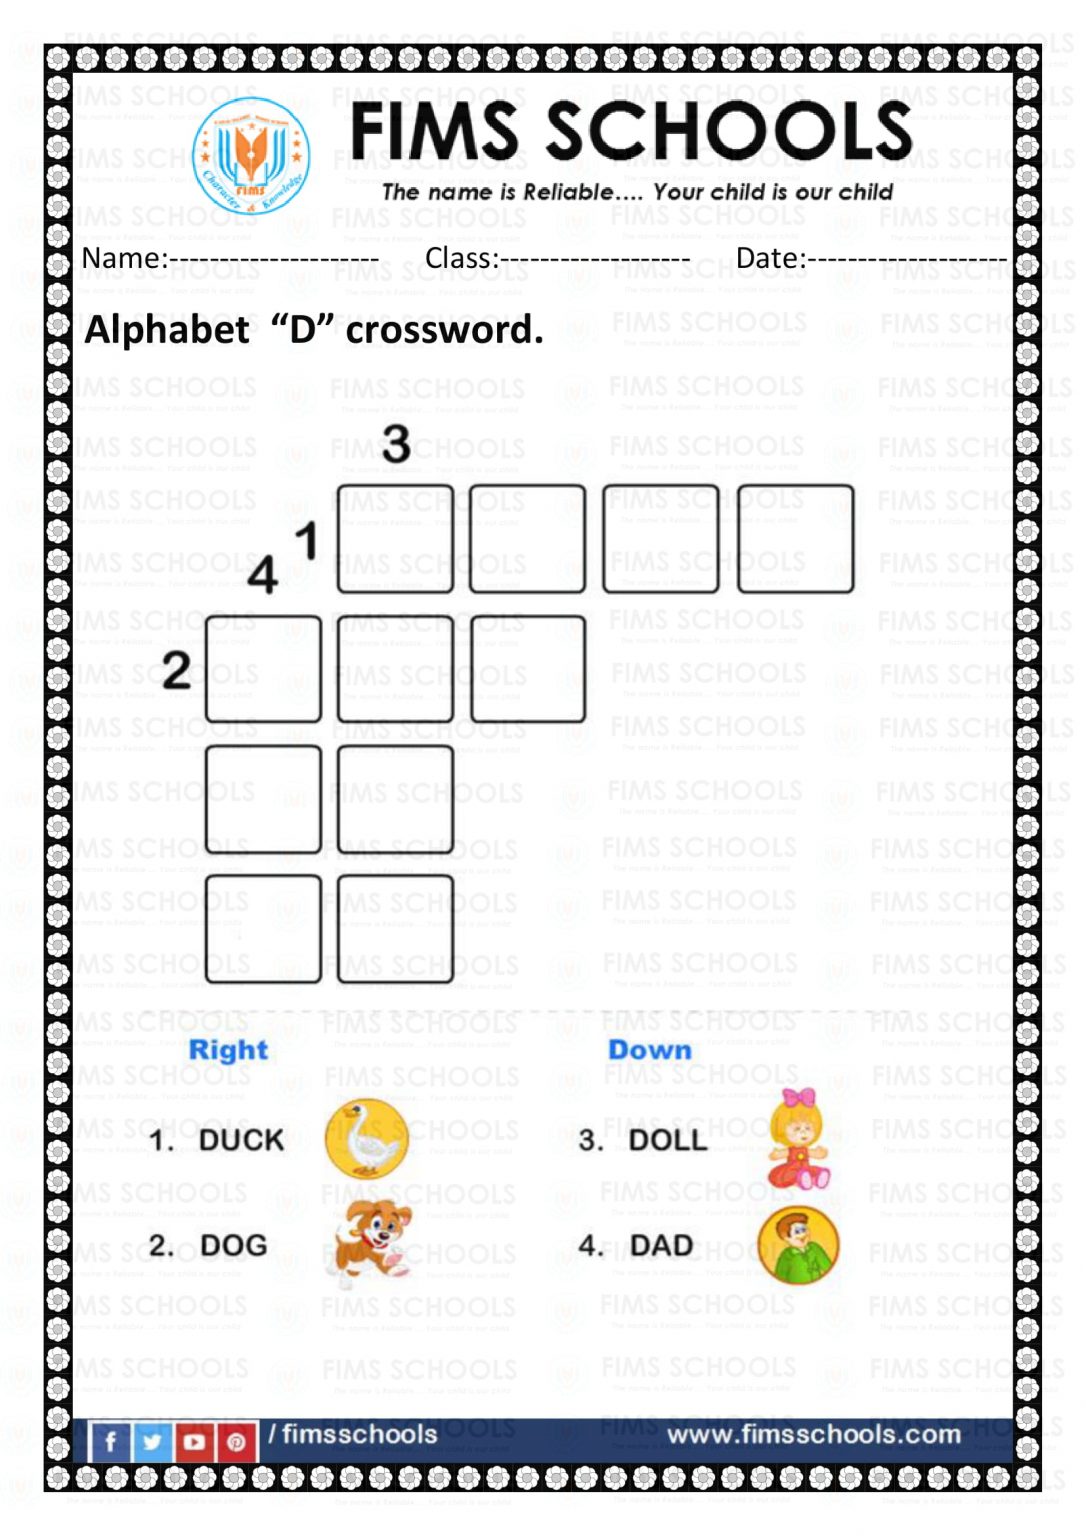 Alphabet A - Z crossword - Preschool FIMS SCHOOLS - Alphabet A - Z ...